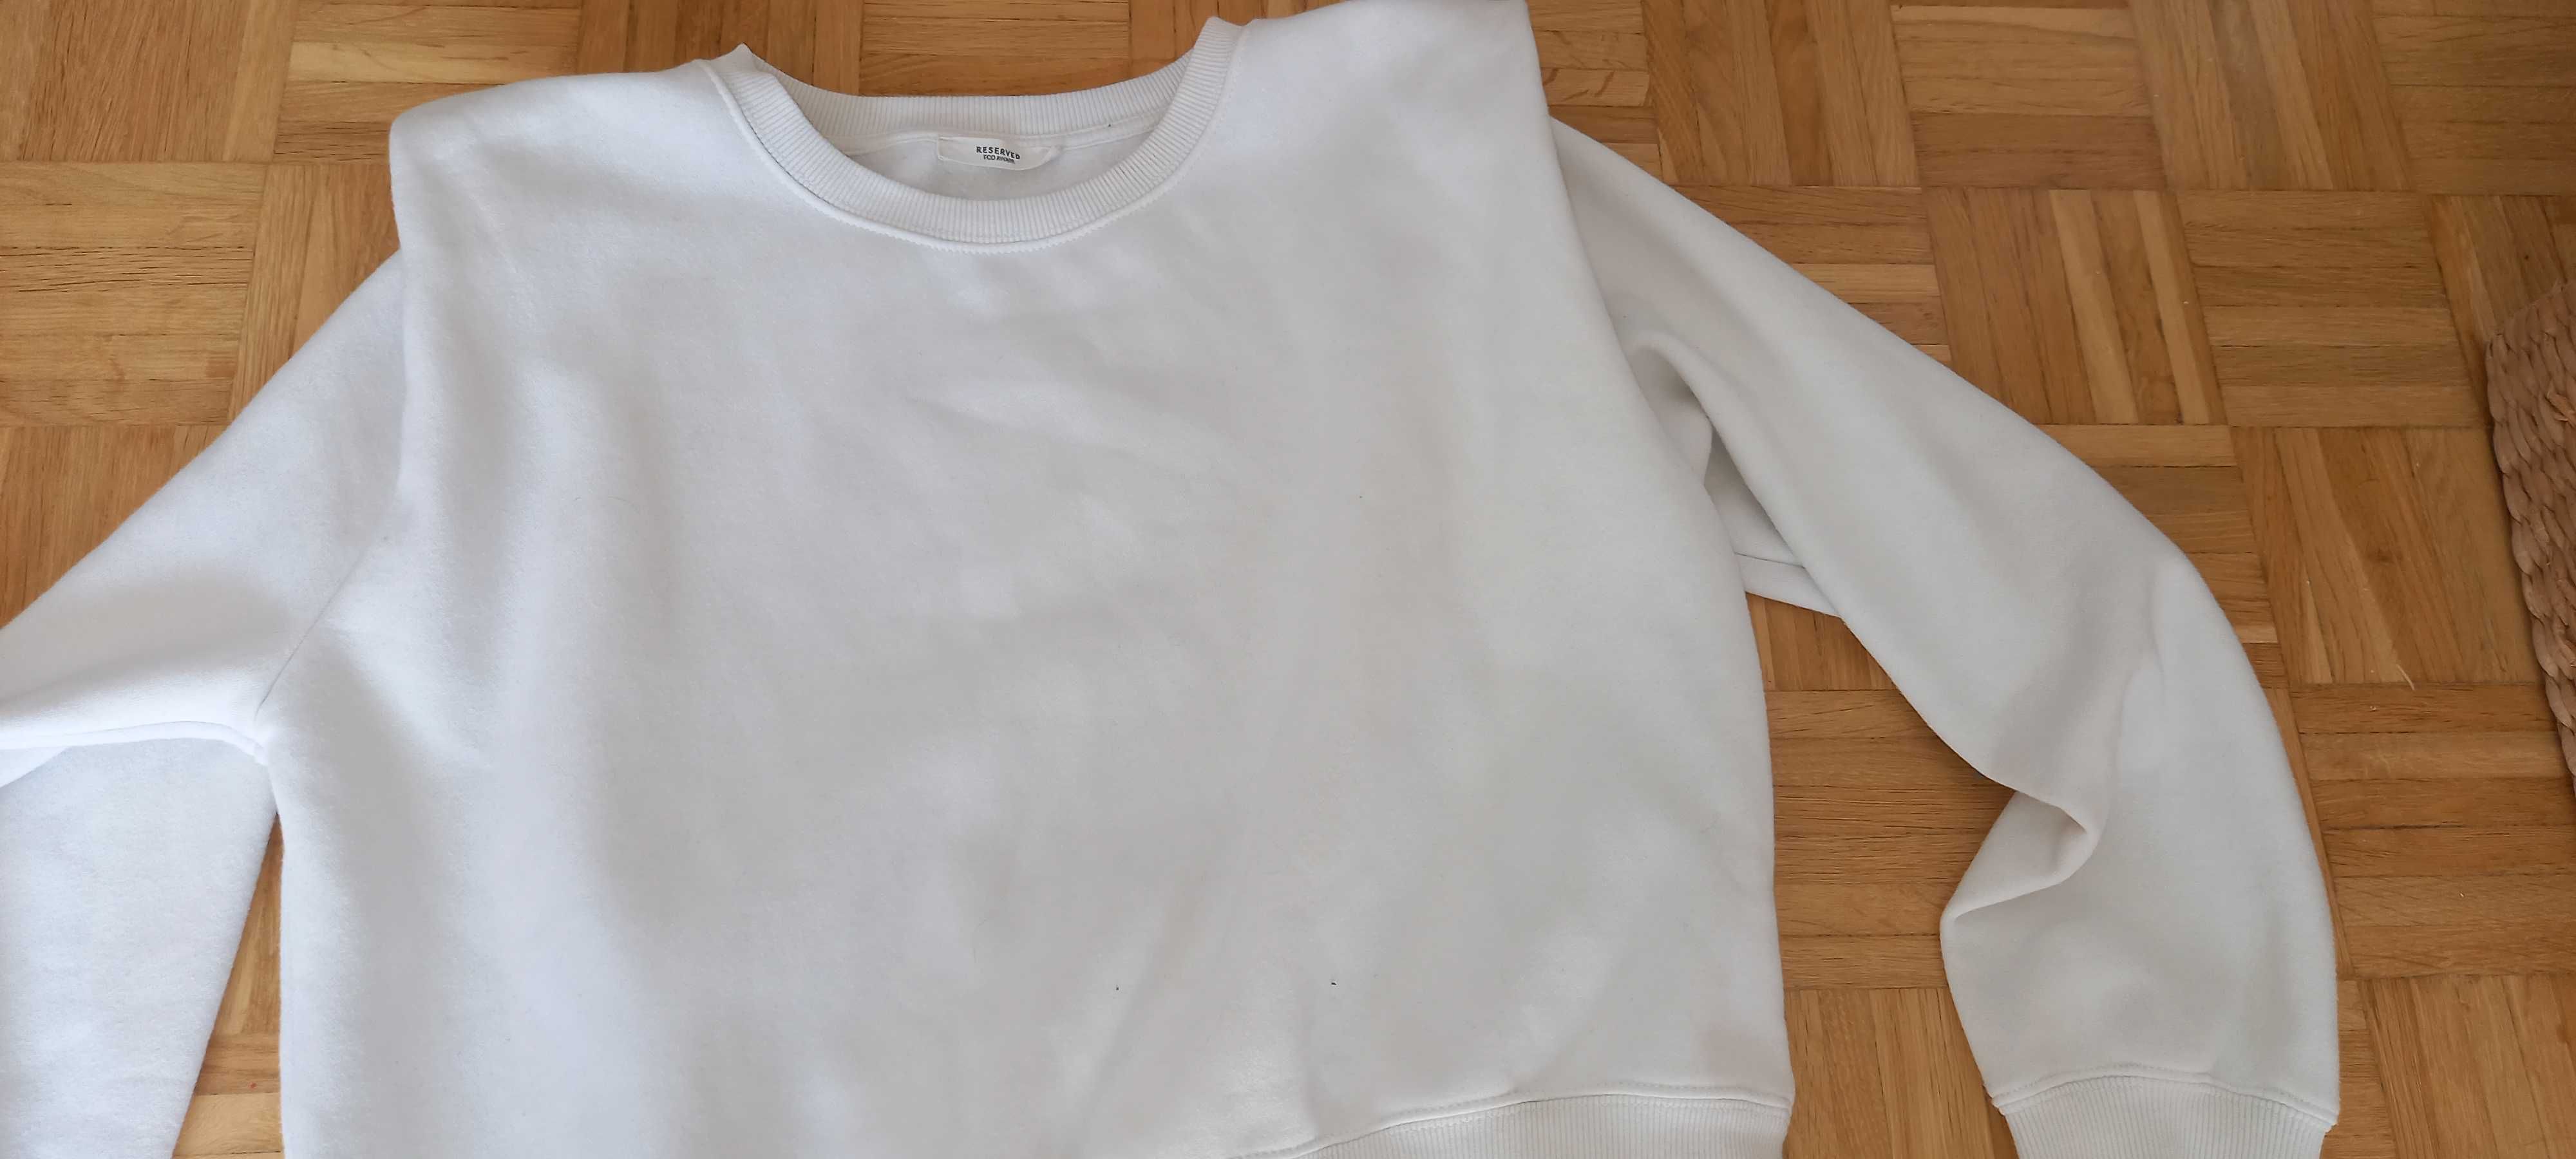 Bluza Reserved damska biała rozmiar L.